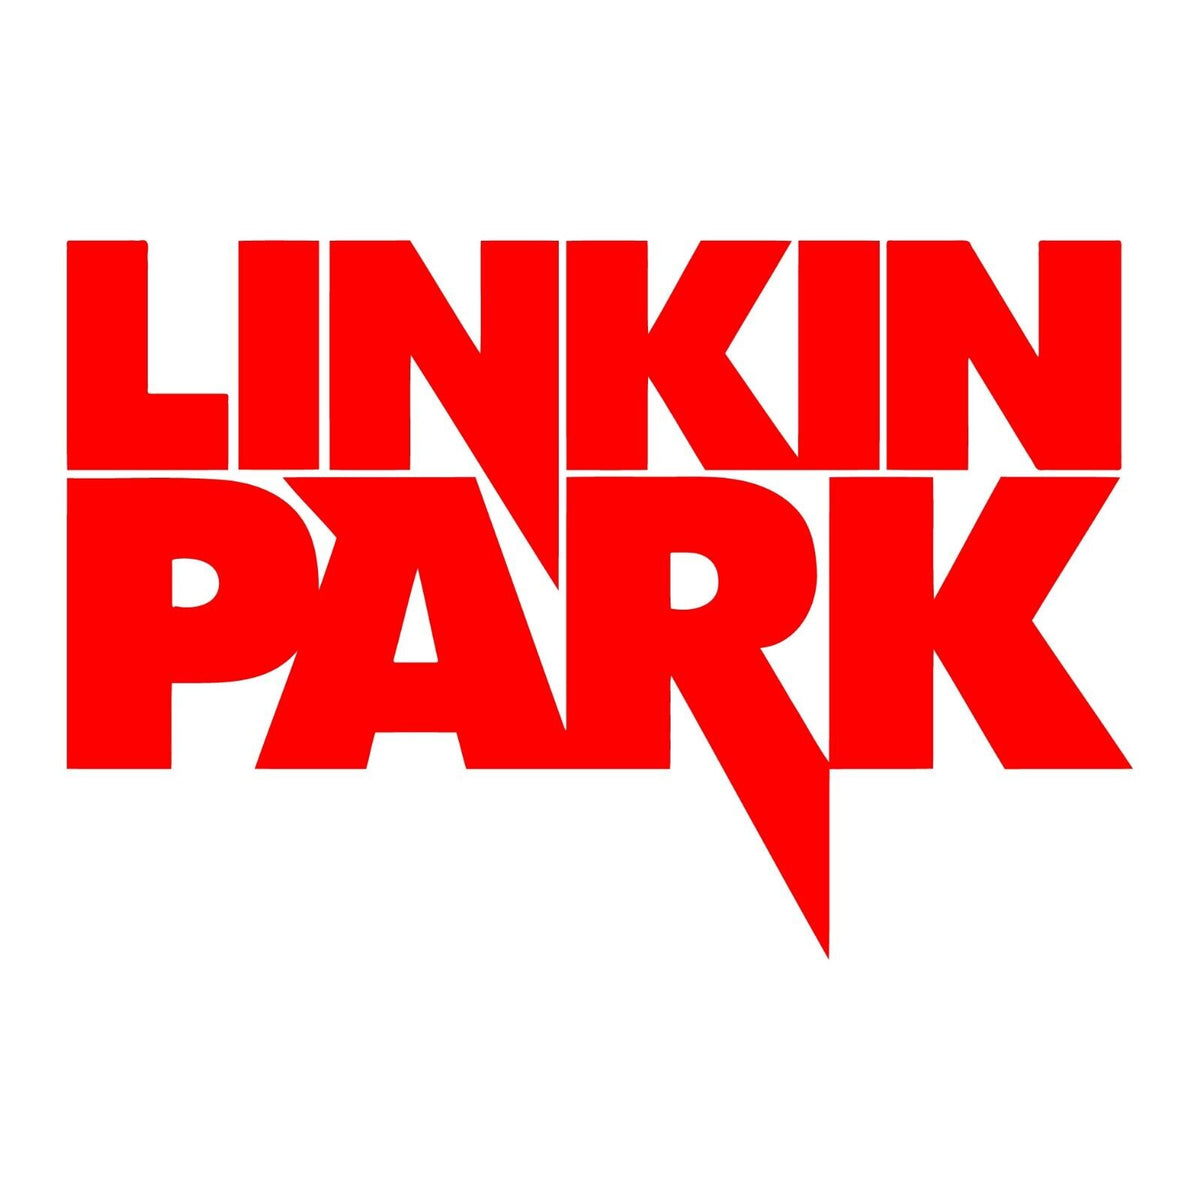 linkin park logo vector